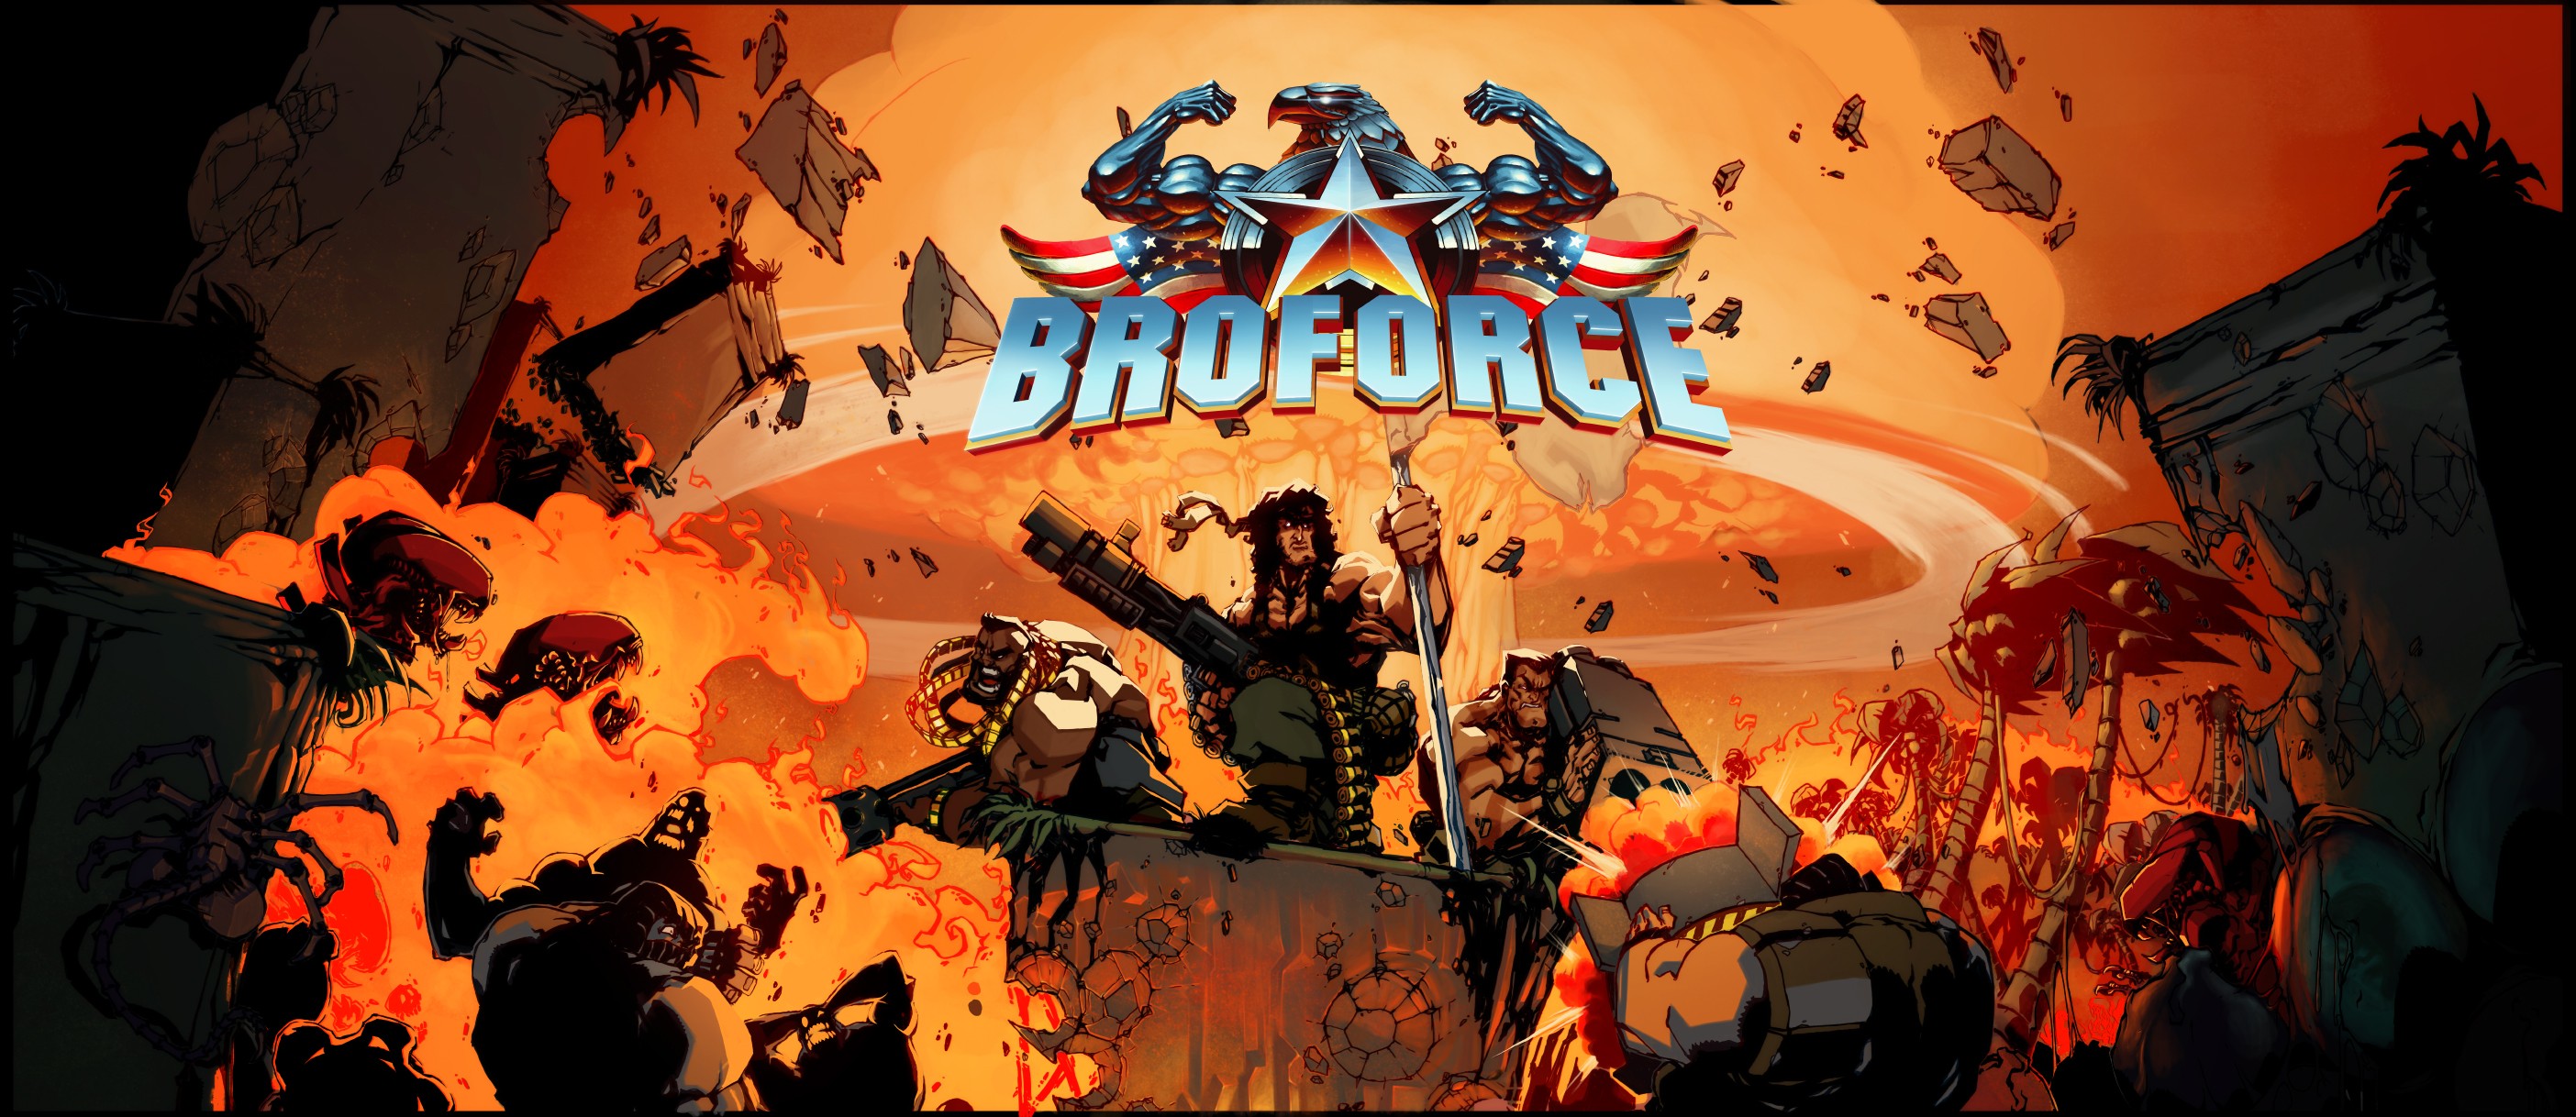 Broforce, Video Games, PC Gaming, Cover Art Wallpaper